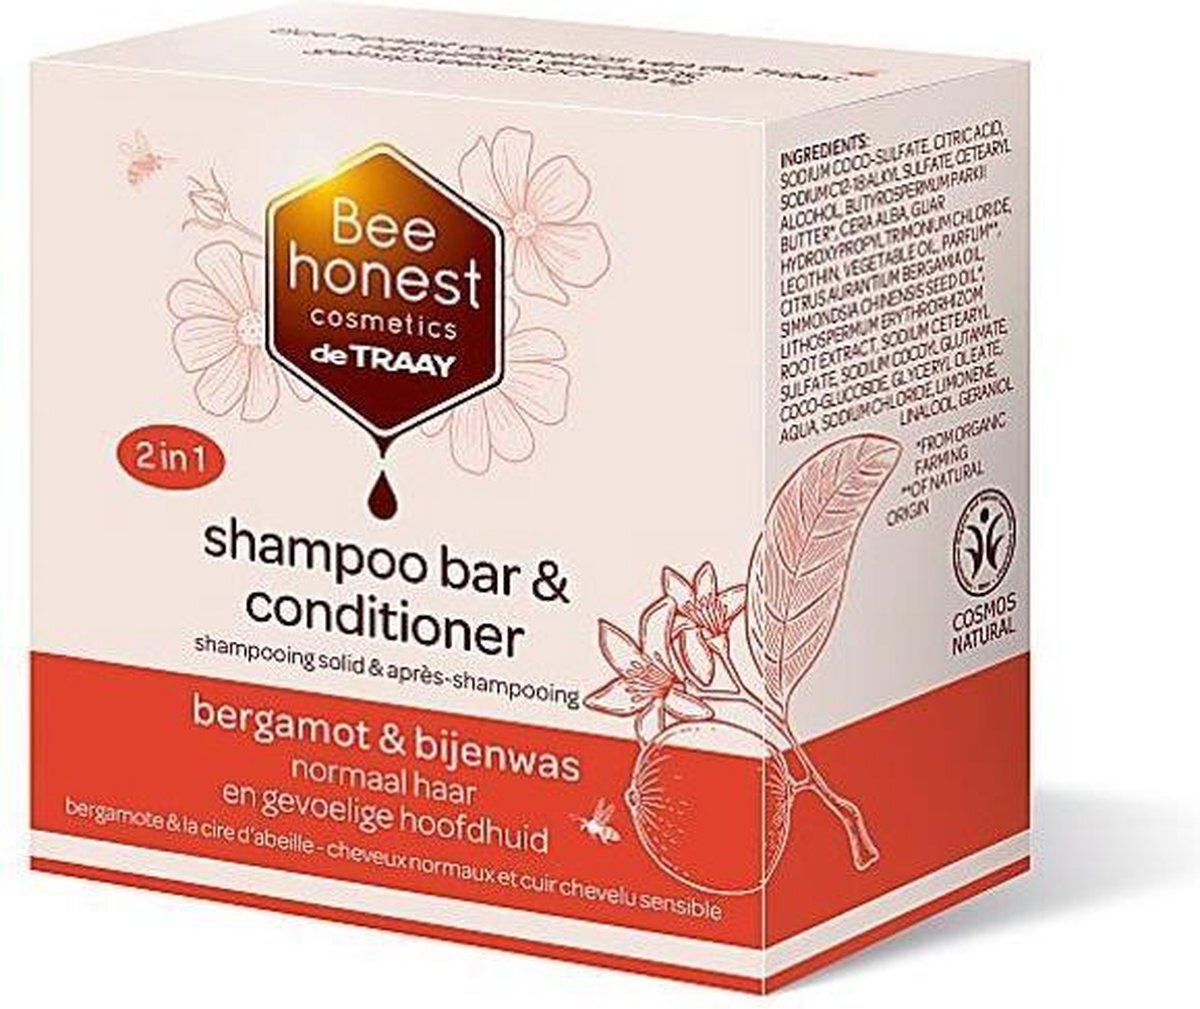 De Traay Bee Honest Shampoo Bar & Conditioner Bergamot & Bijenwas